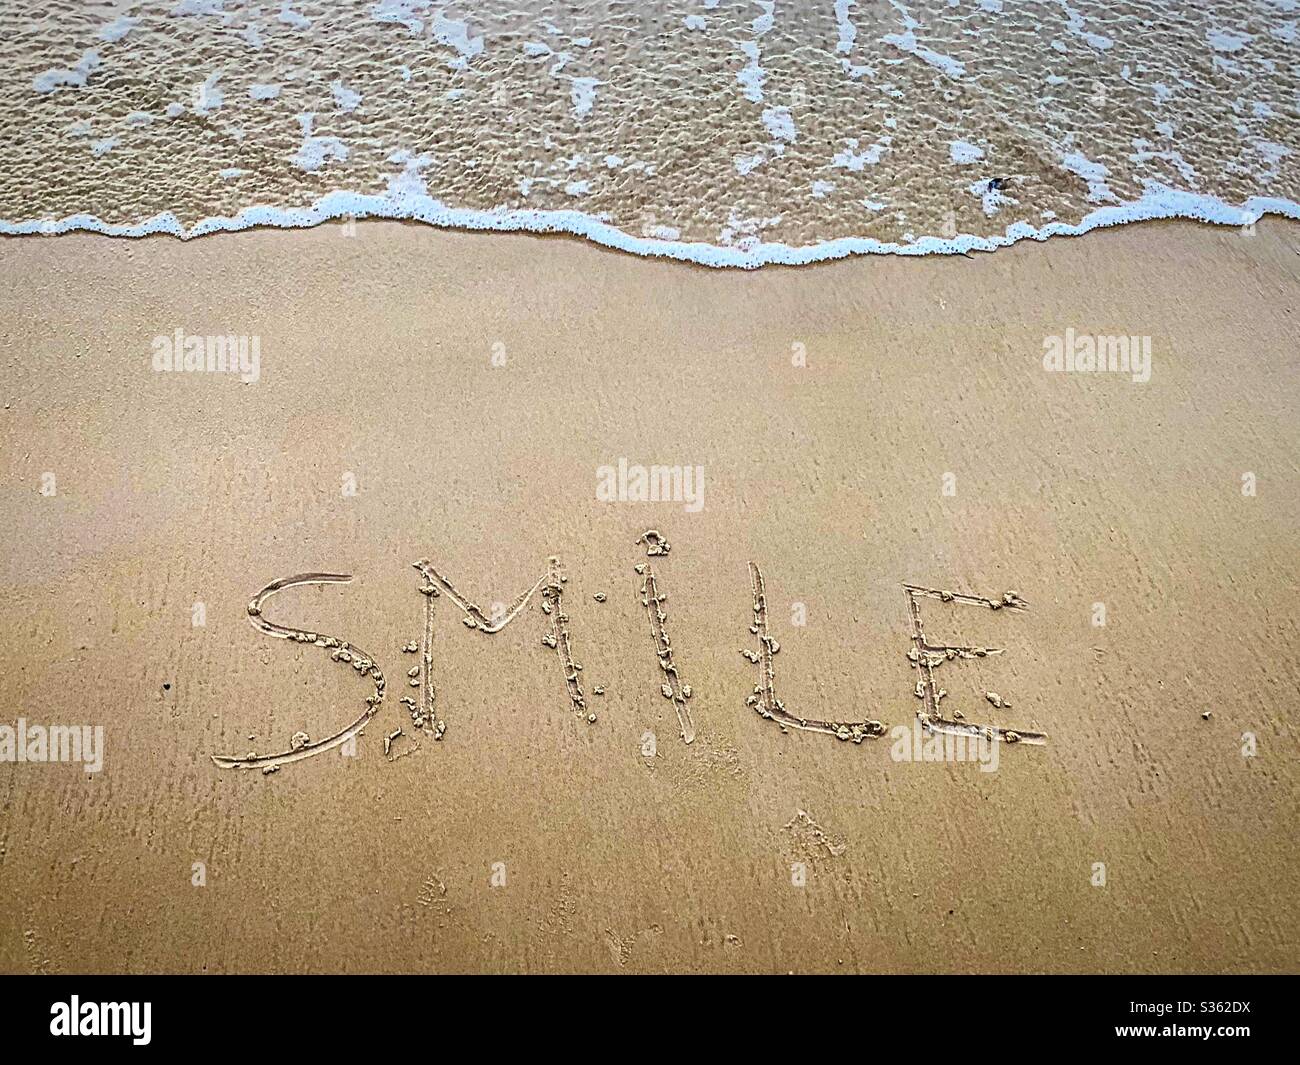 Smile written on sand at The Beach Stock Photo